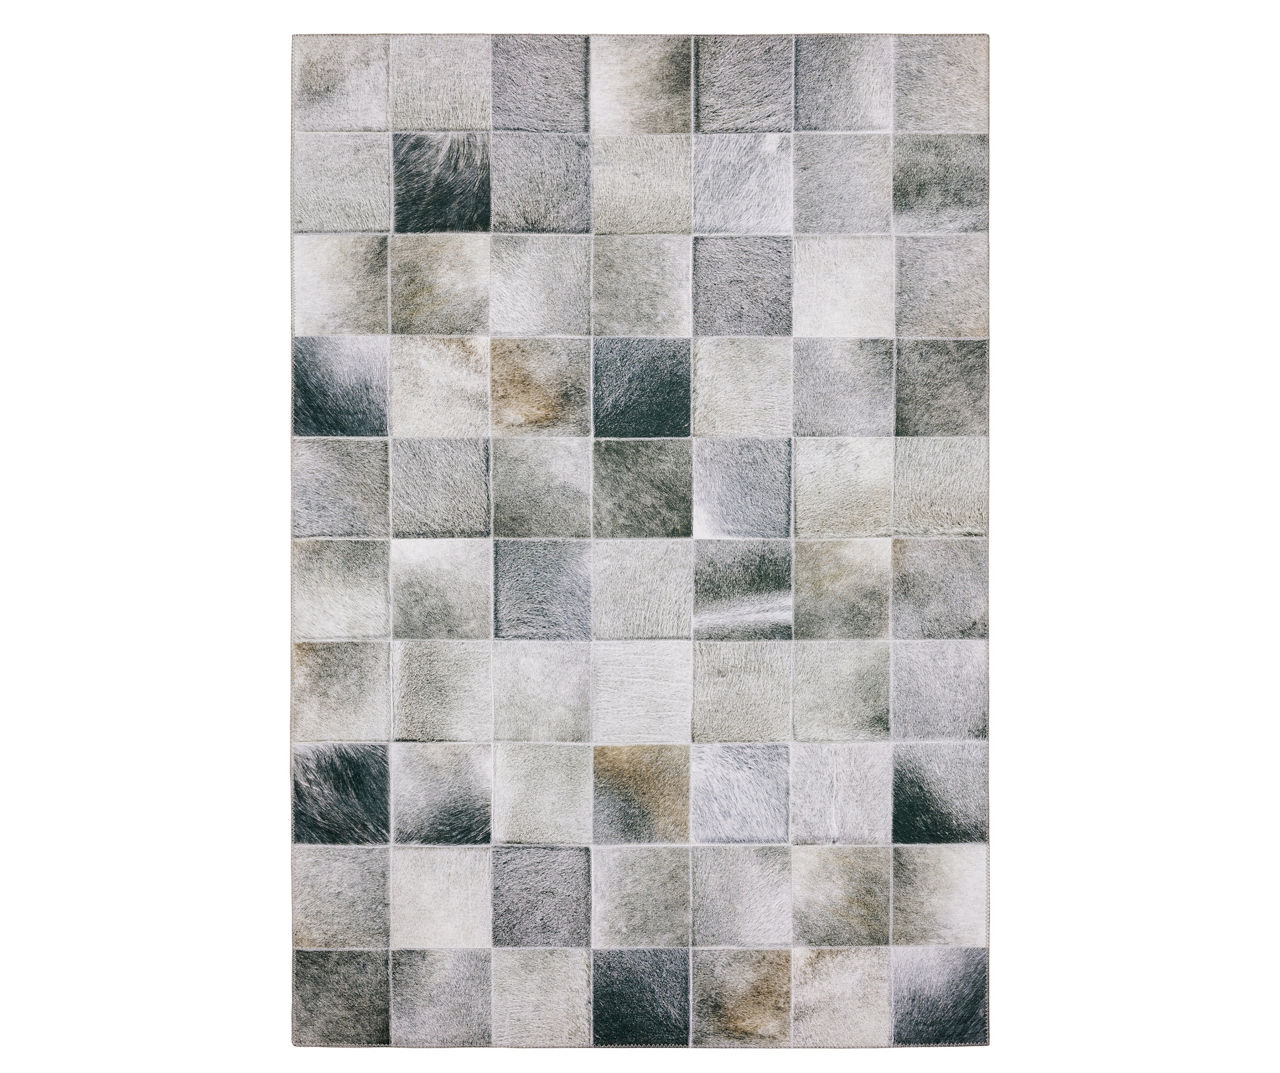 Mylen Gray & Charcoal Faux Hide Tile Pattern Area Rug, (7.8' x 10')